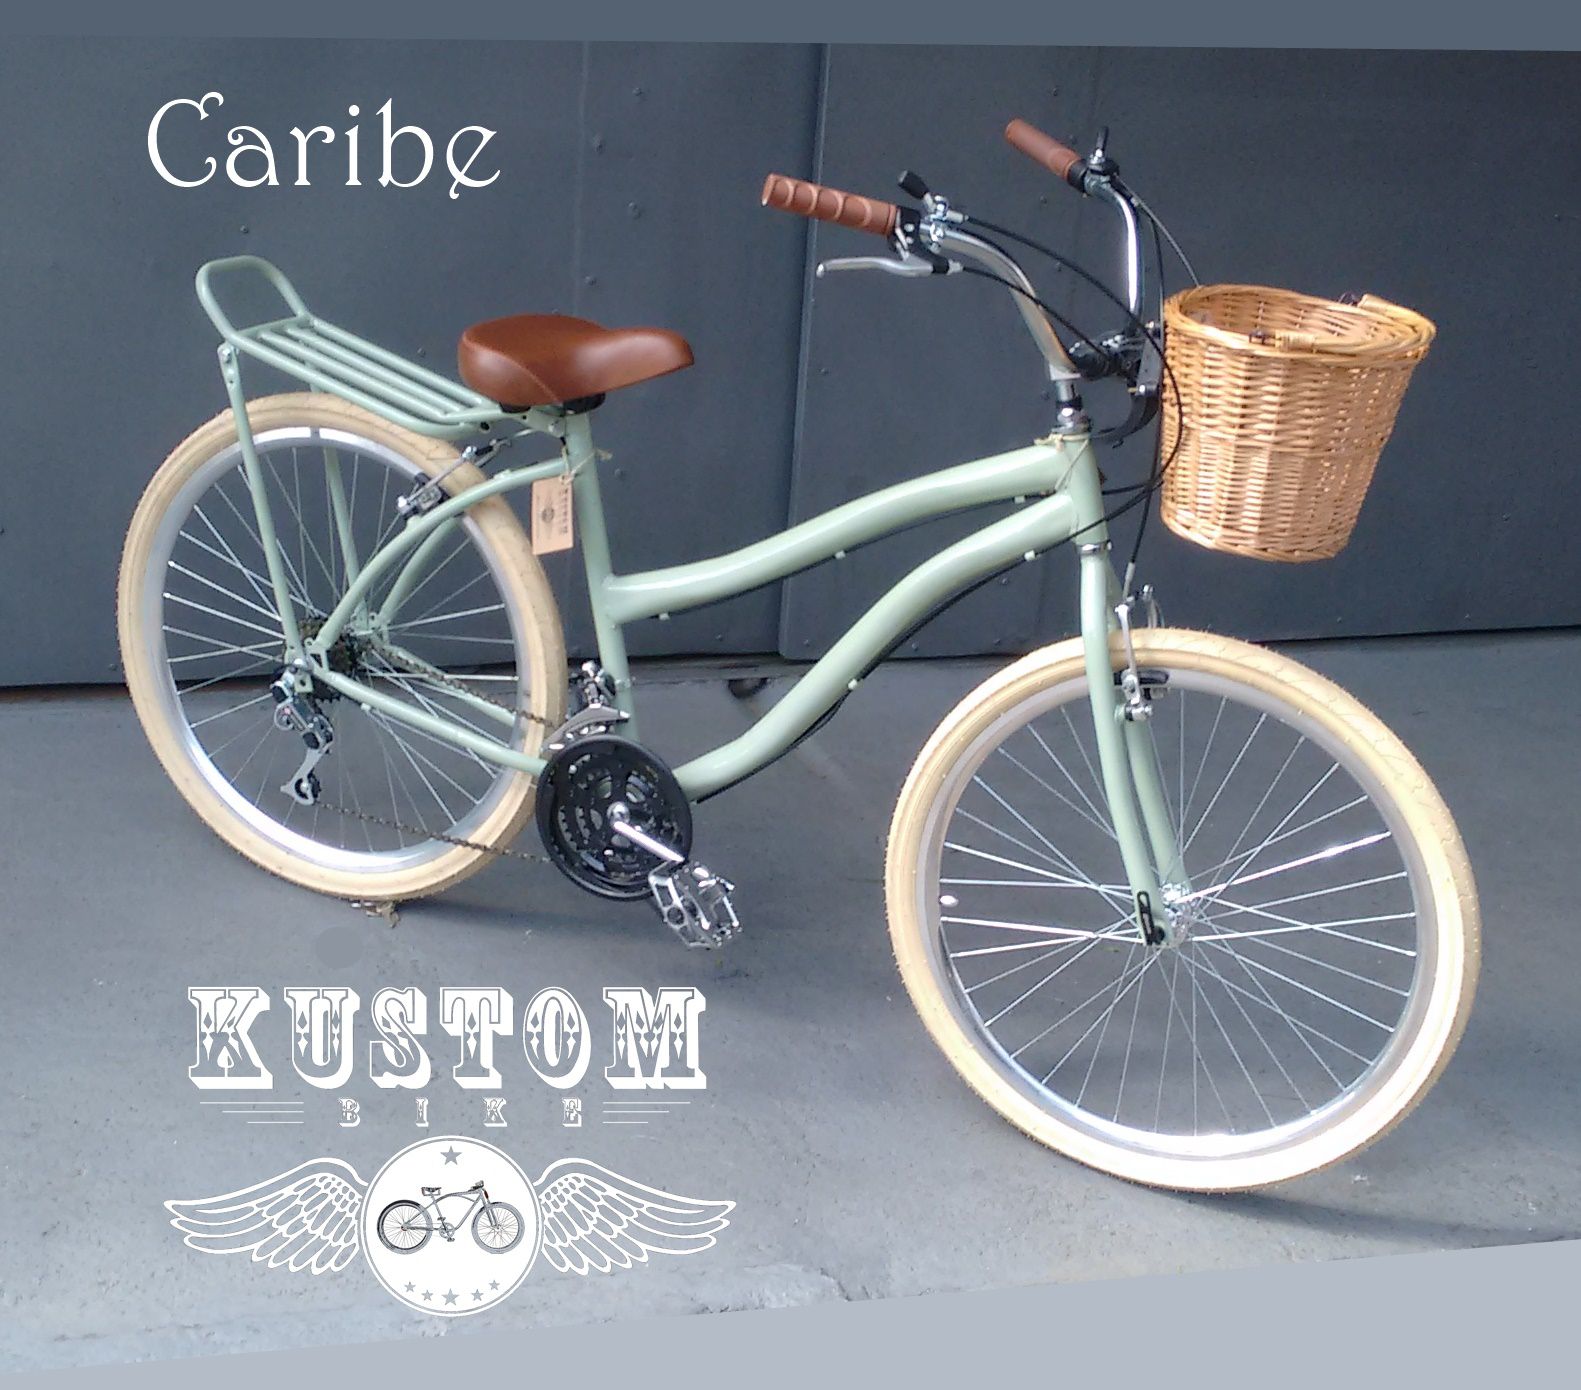 Bicicleta Vintage Verde Caribe - Cesta Vime Banco Couro 18 Marchas - Kustom  Bike - Bicicletas com Personalidade